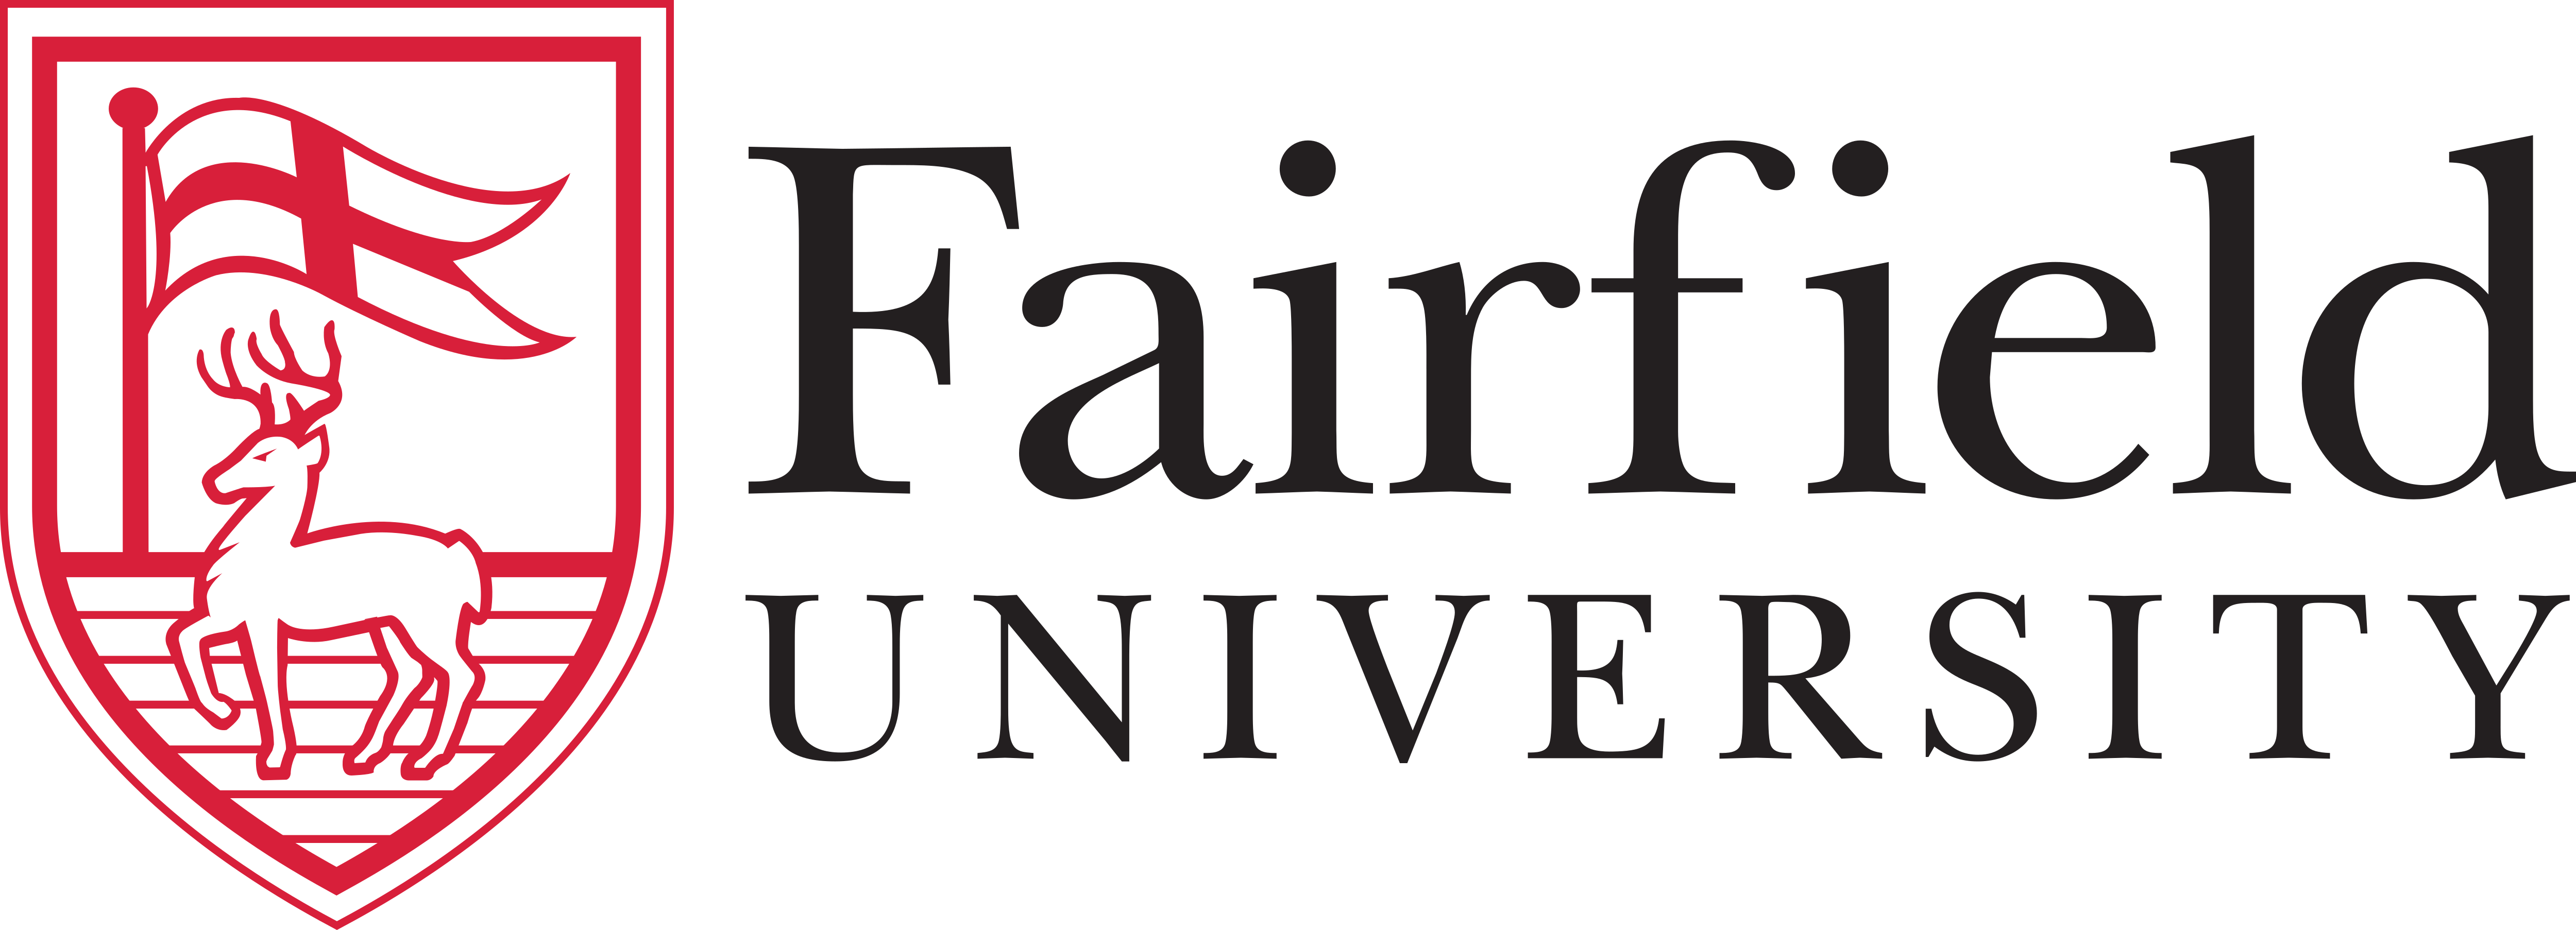 Fairfield University – Logos Download